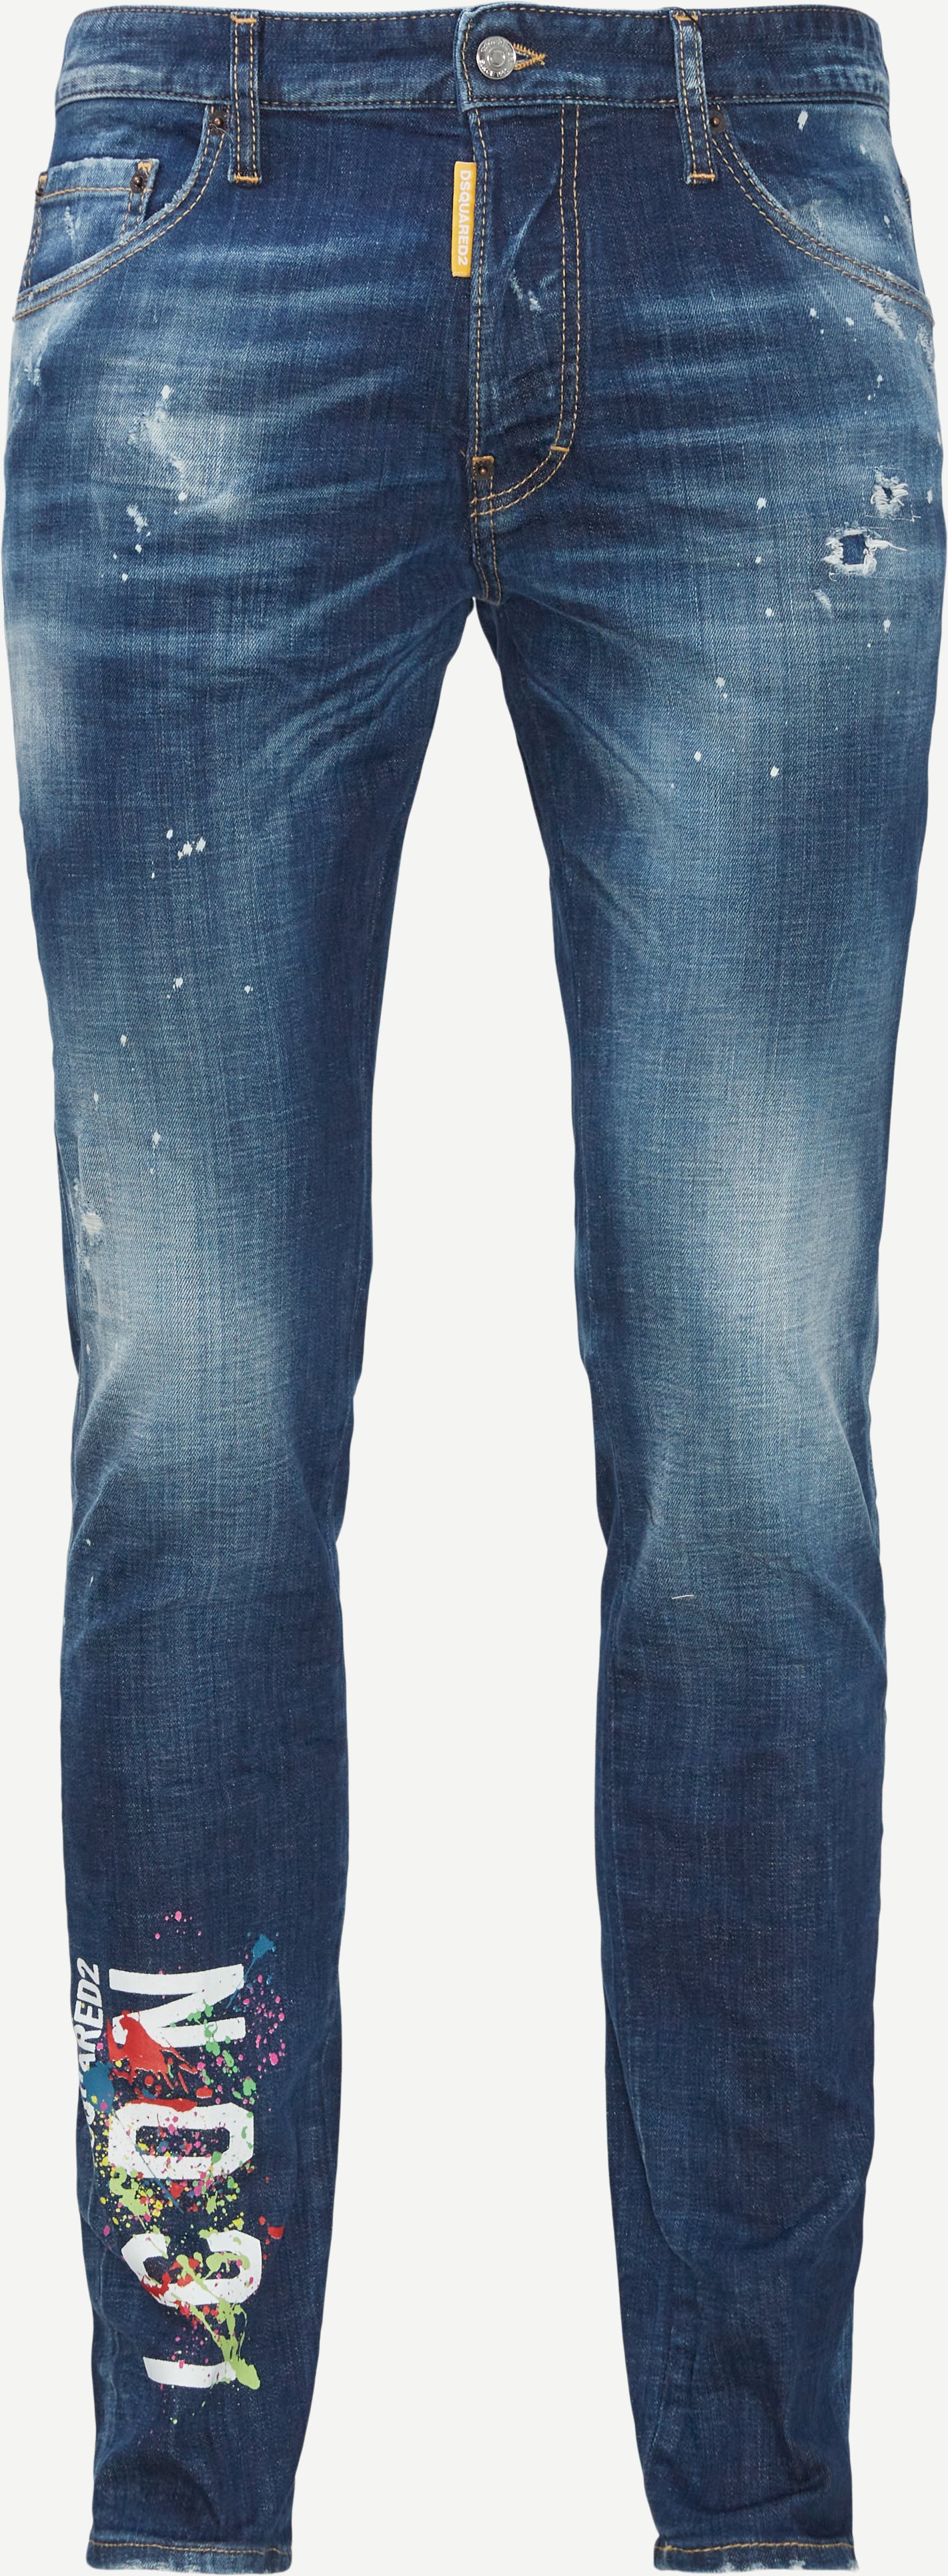 Icon Splatter Cool Guy Jeans - Jeans - Slim fit - Denim